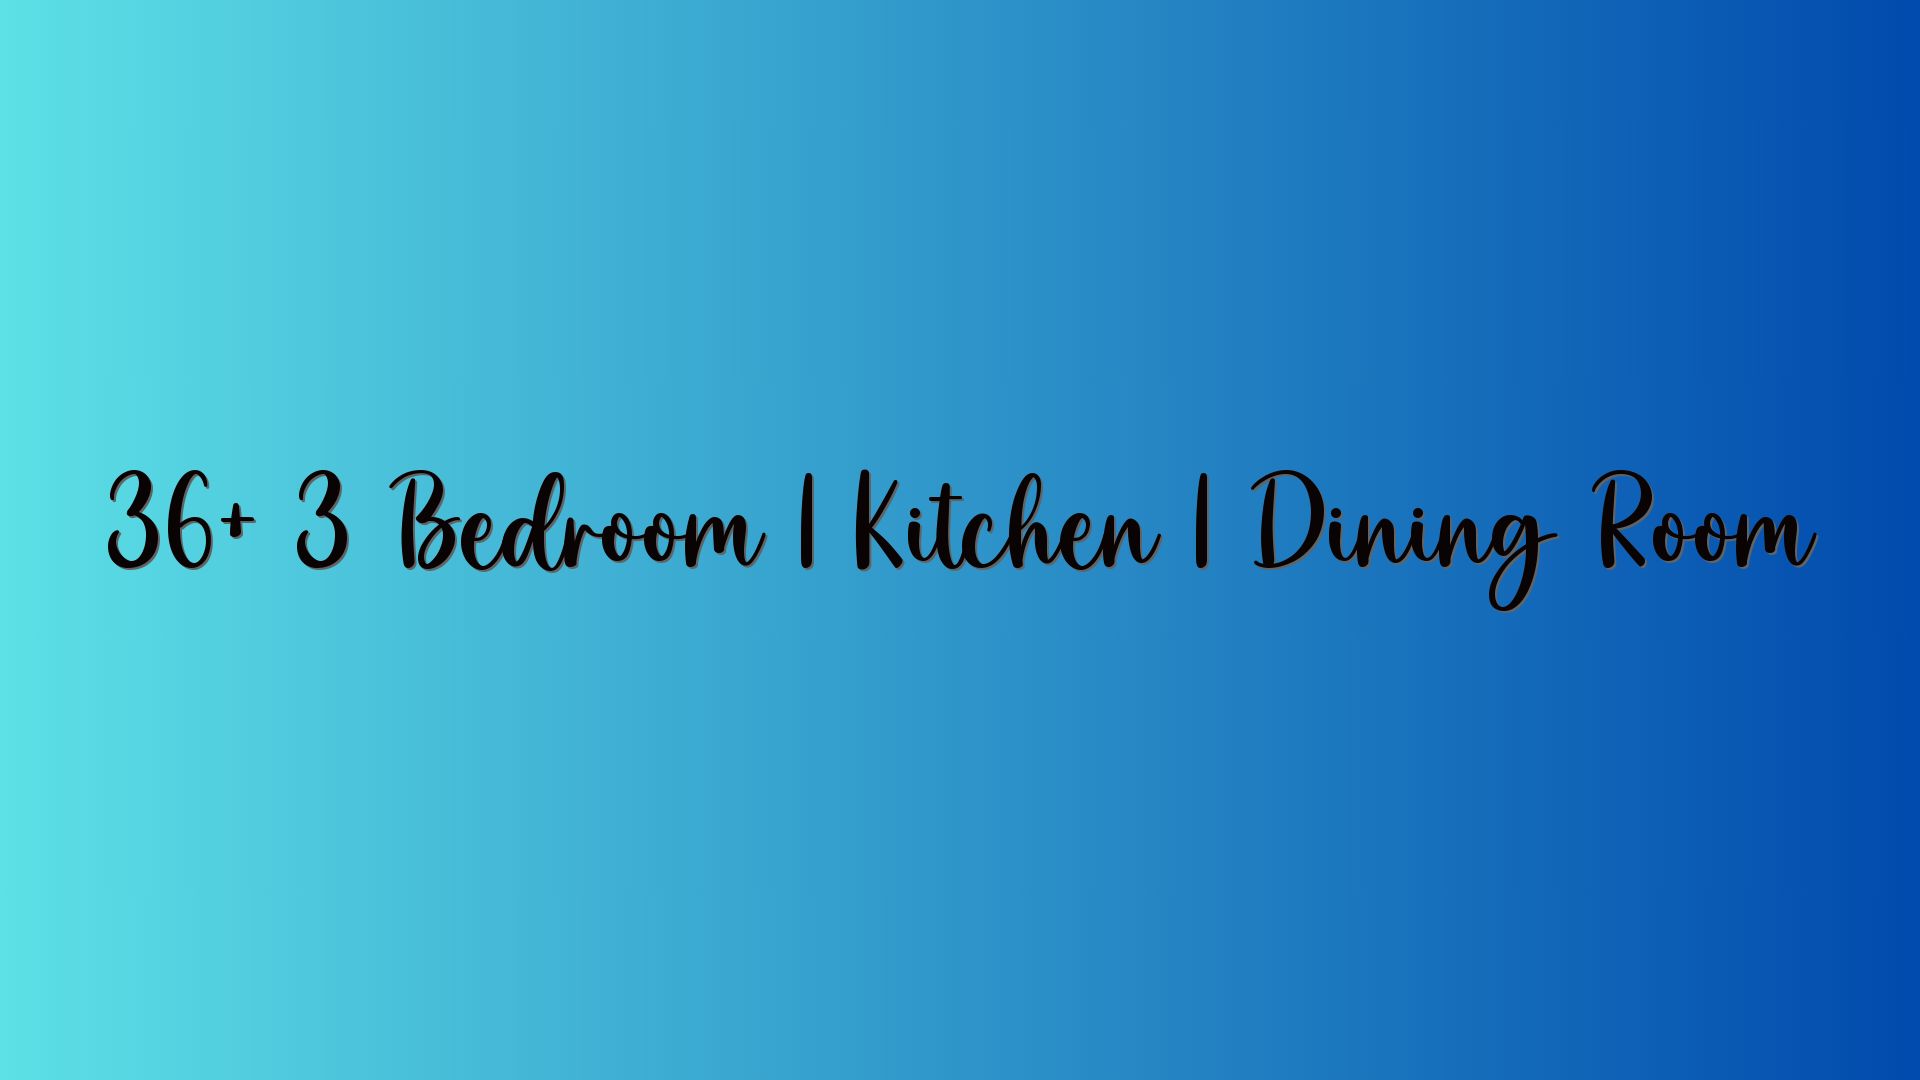 36+ 3 Bedroom 1 Kitchen 1 Dining Room